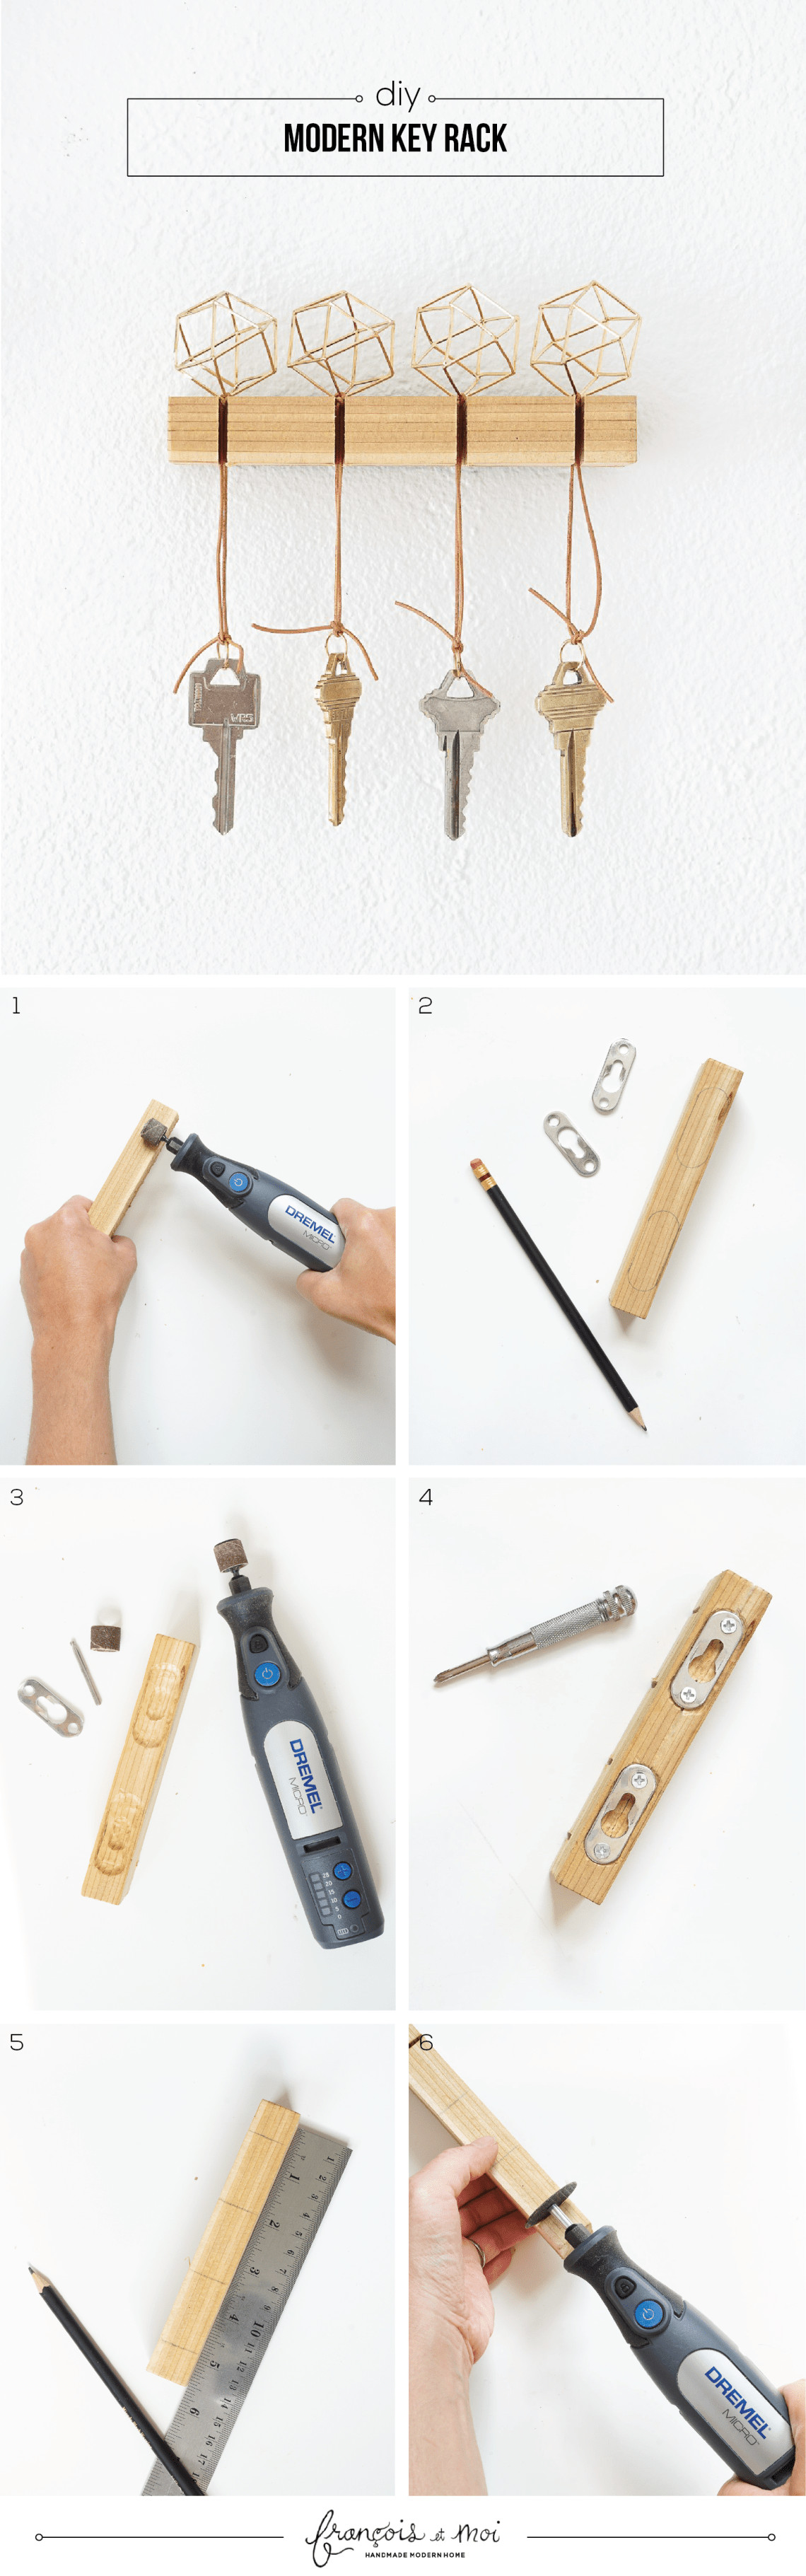 Best ideas about DIY Key Rack
. Save or Pin DIY Modern Key Holder Francois et Moi Now.